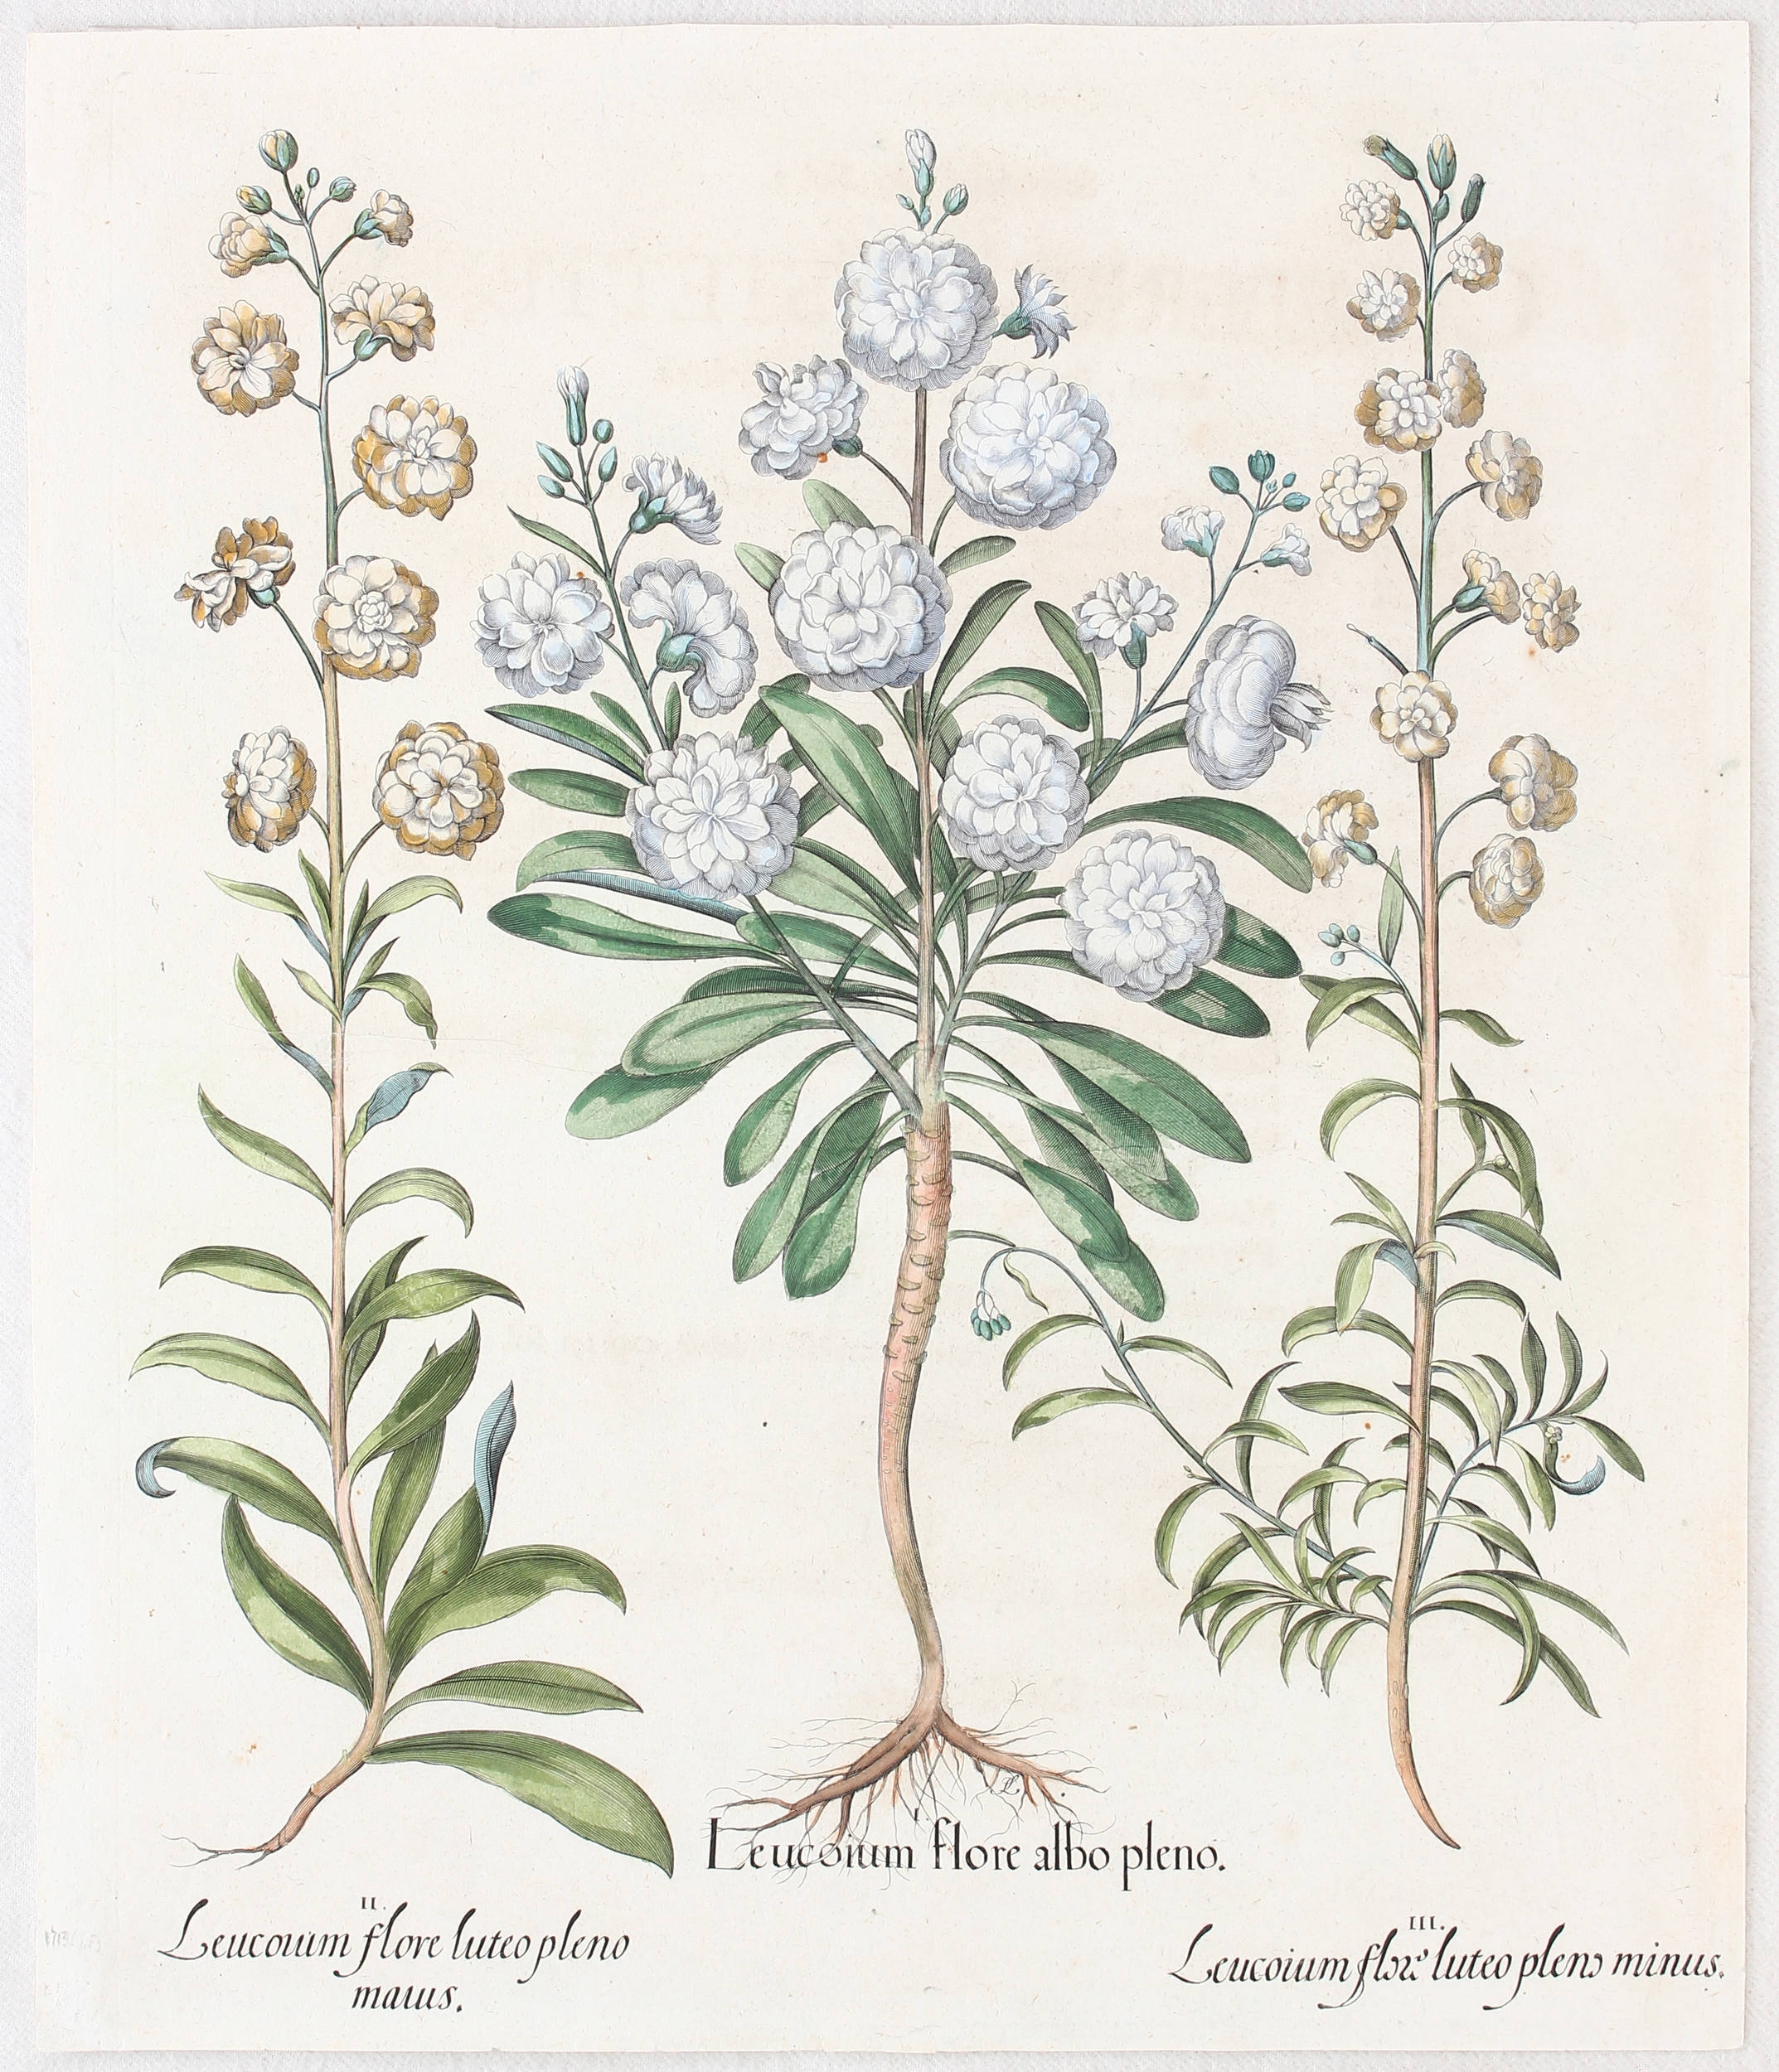 Leucoium flore albo pleno (&) luteo pleno maius (&) minus (Garten-Levkoje und Goldlack)